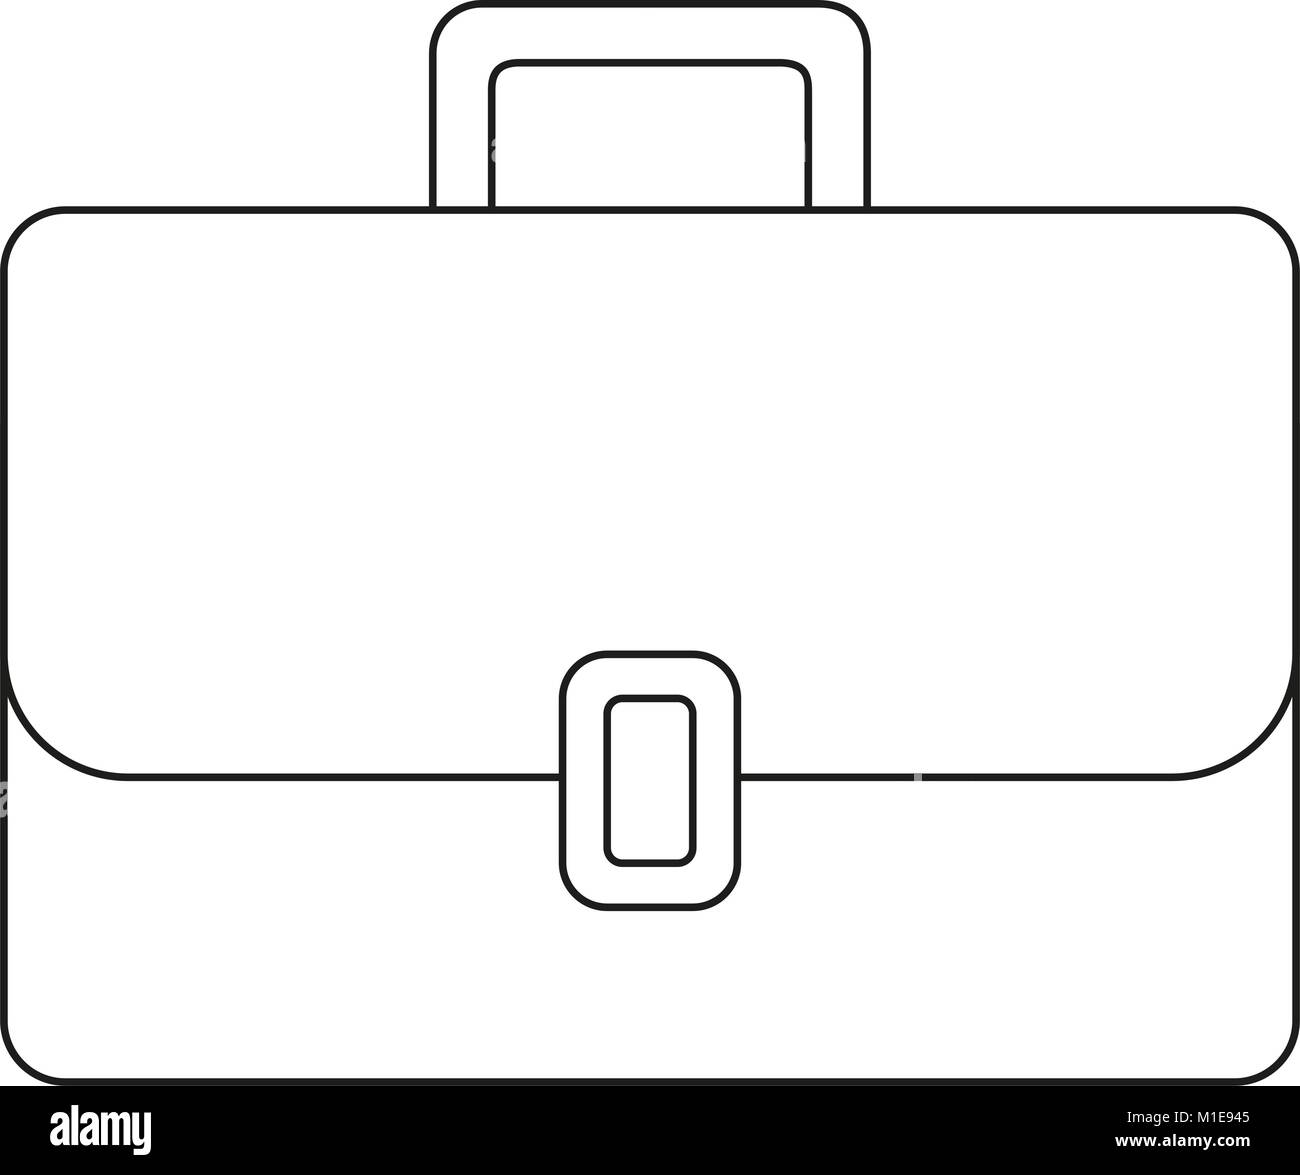 https://c8.alamy.com/comp/M1E945/school-college-university-line-art-icon-poster-leather-bag-briefcase-M1E945.jpg